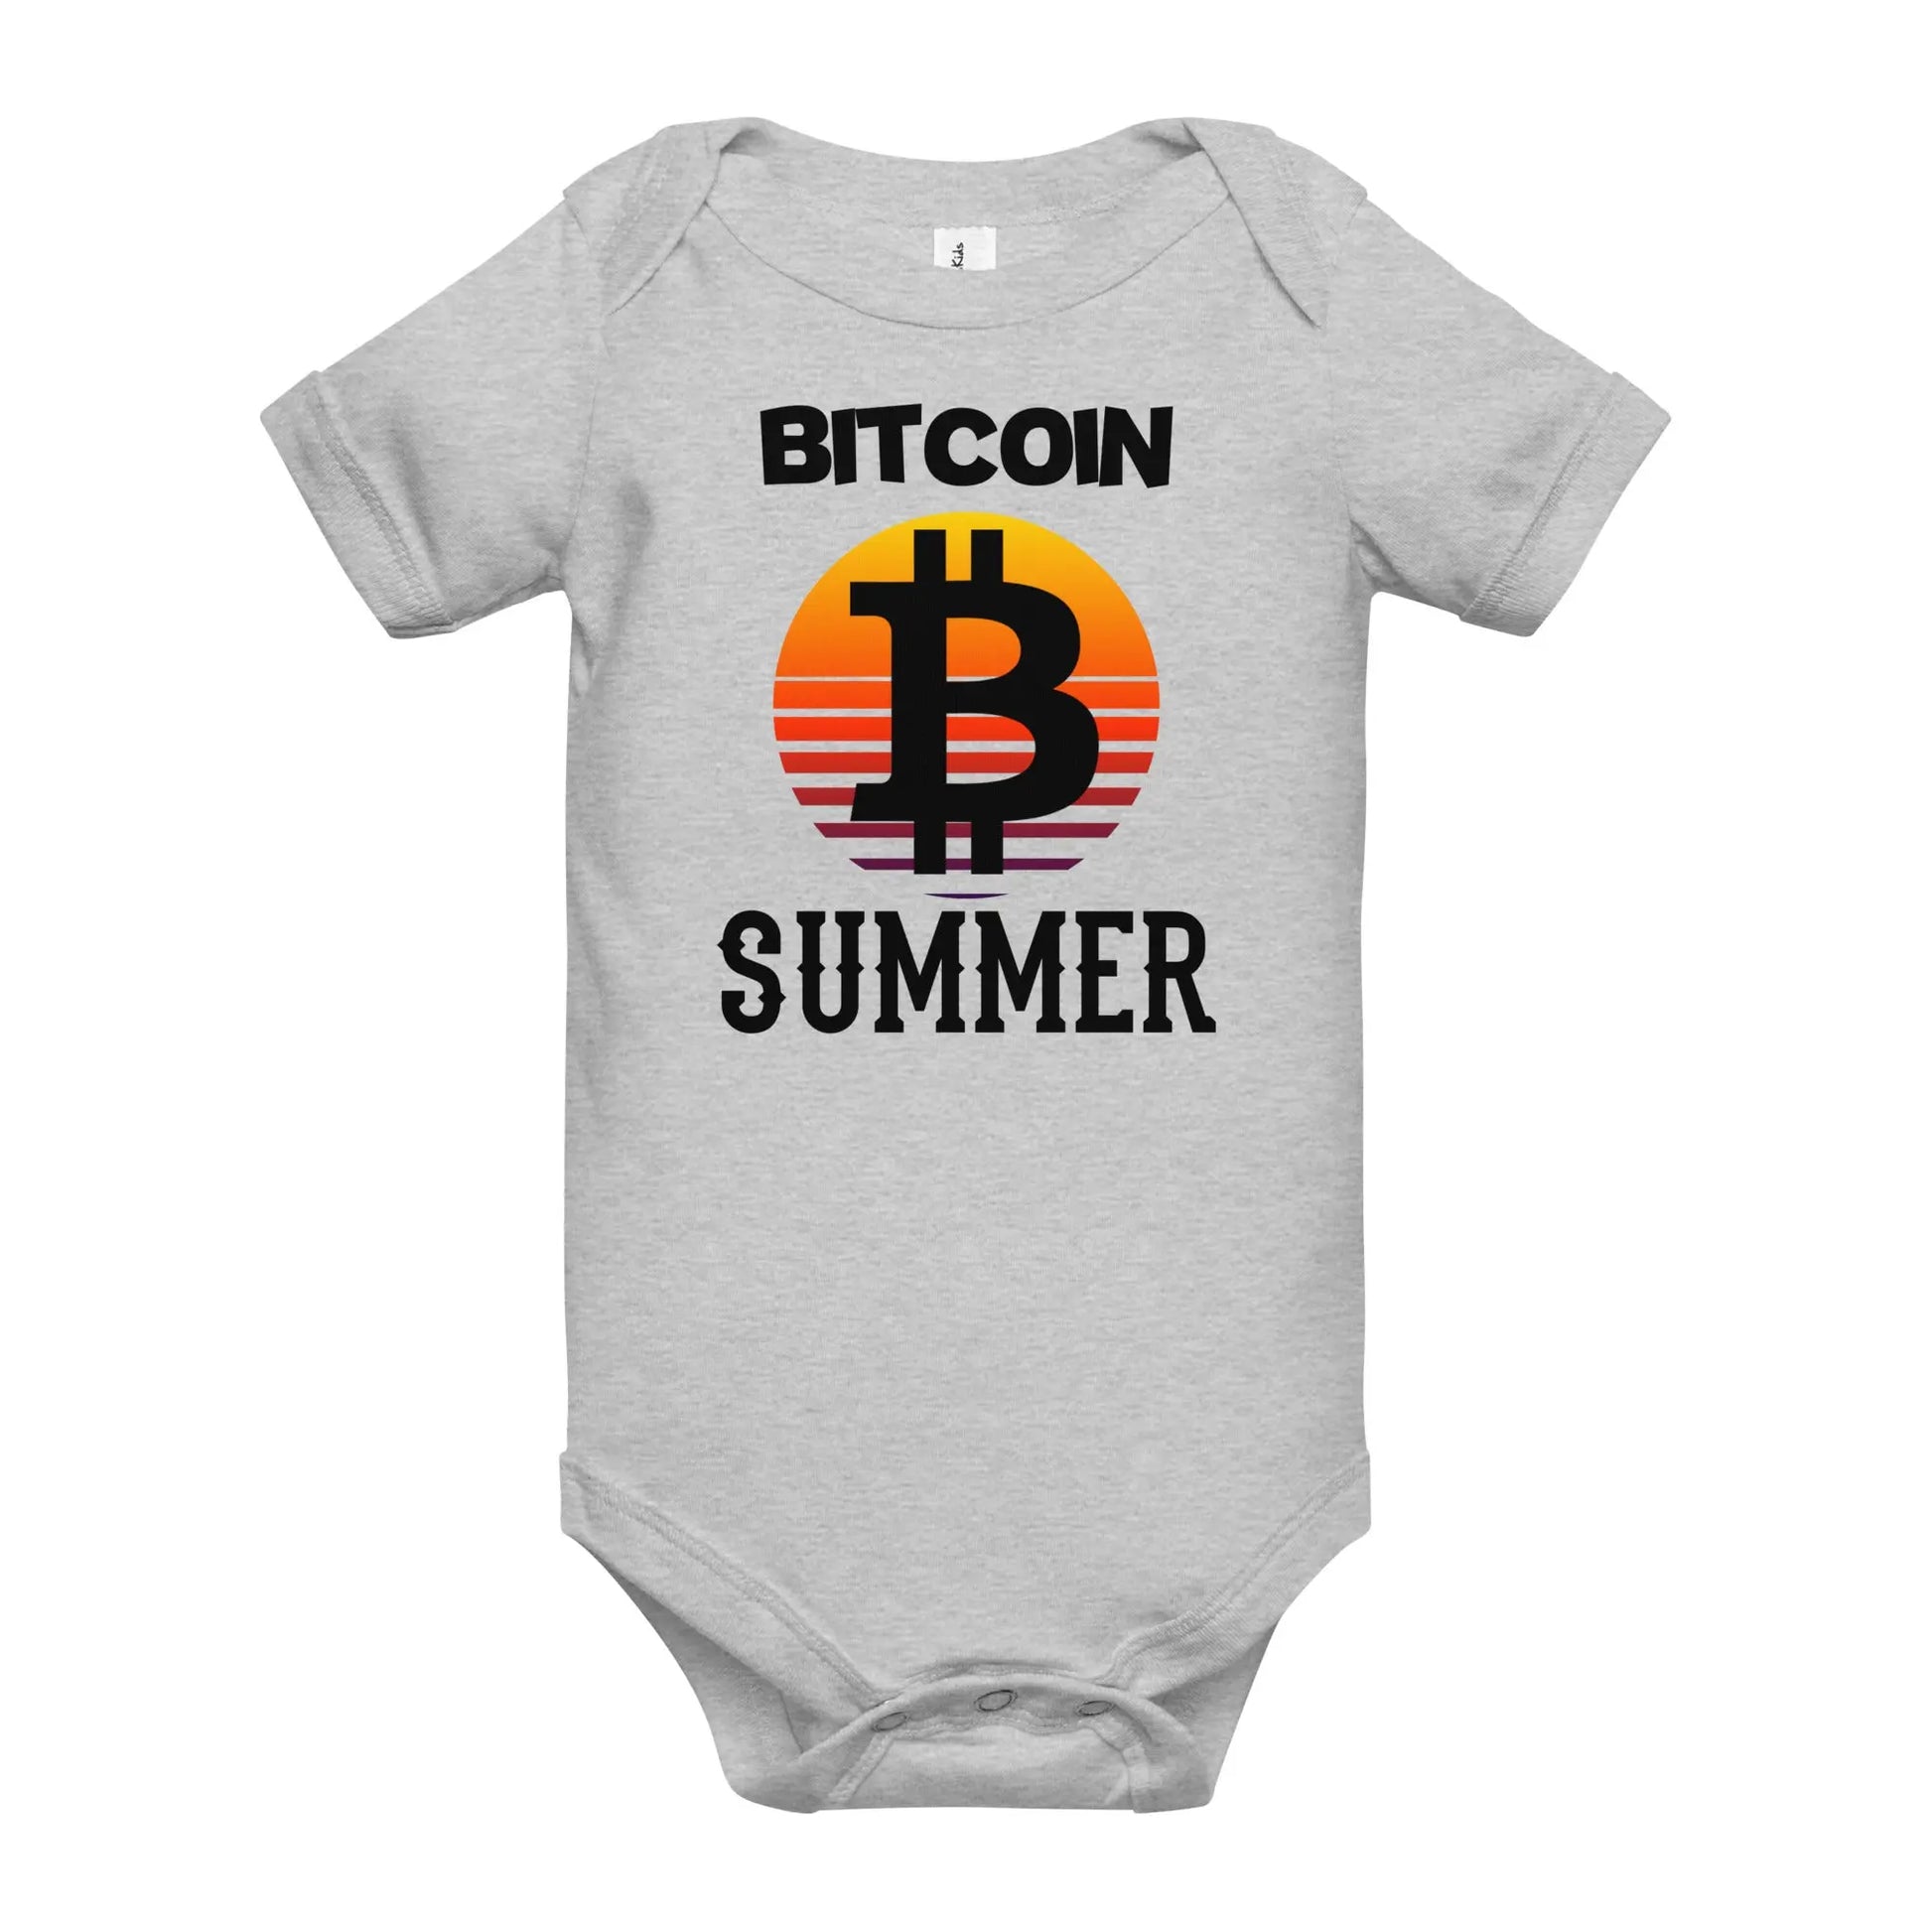 Bitcoin Summer - Baby Bitcoin Body Suit Grey Color